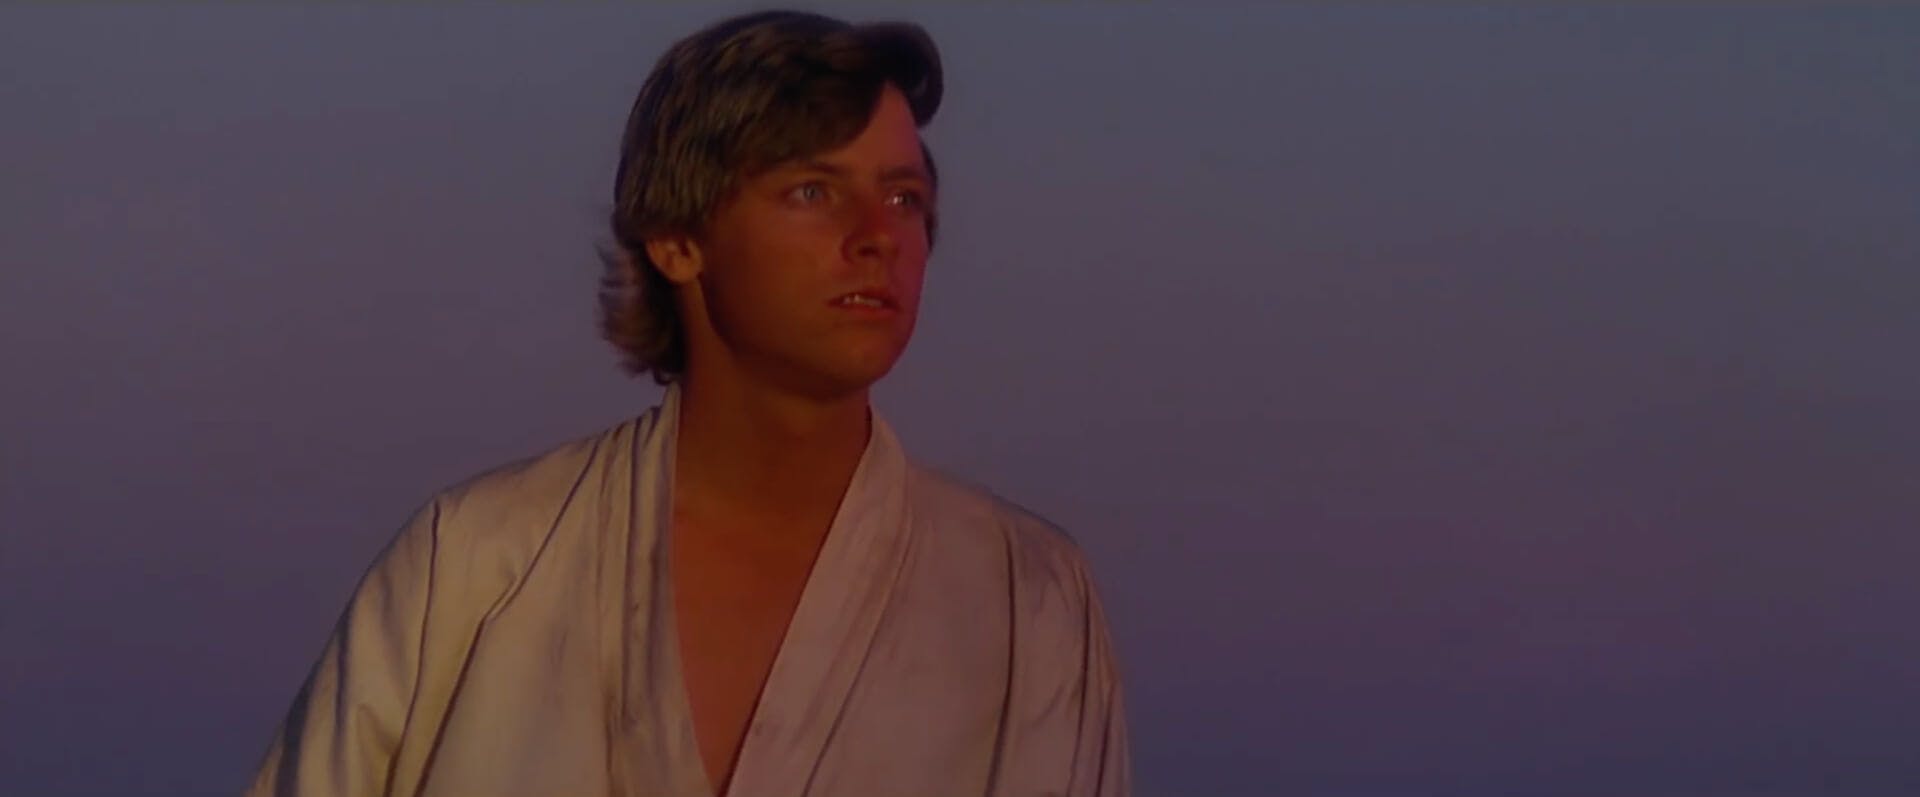 star wars movies ranking A New Hope - Luke Skywalker